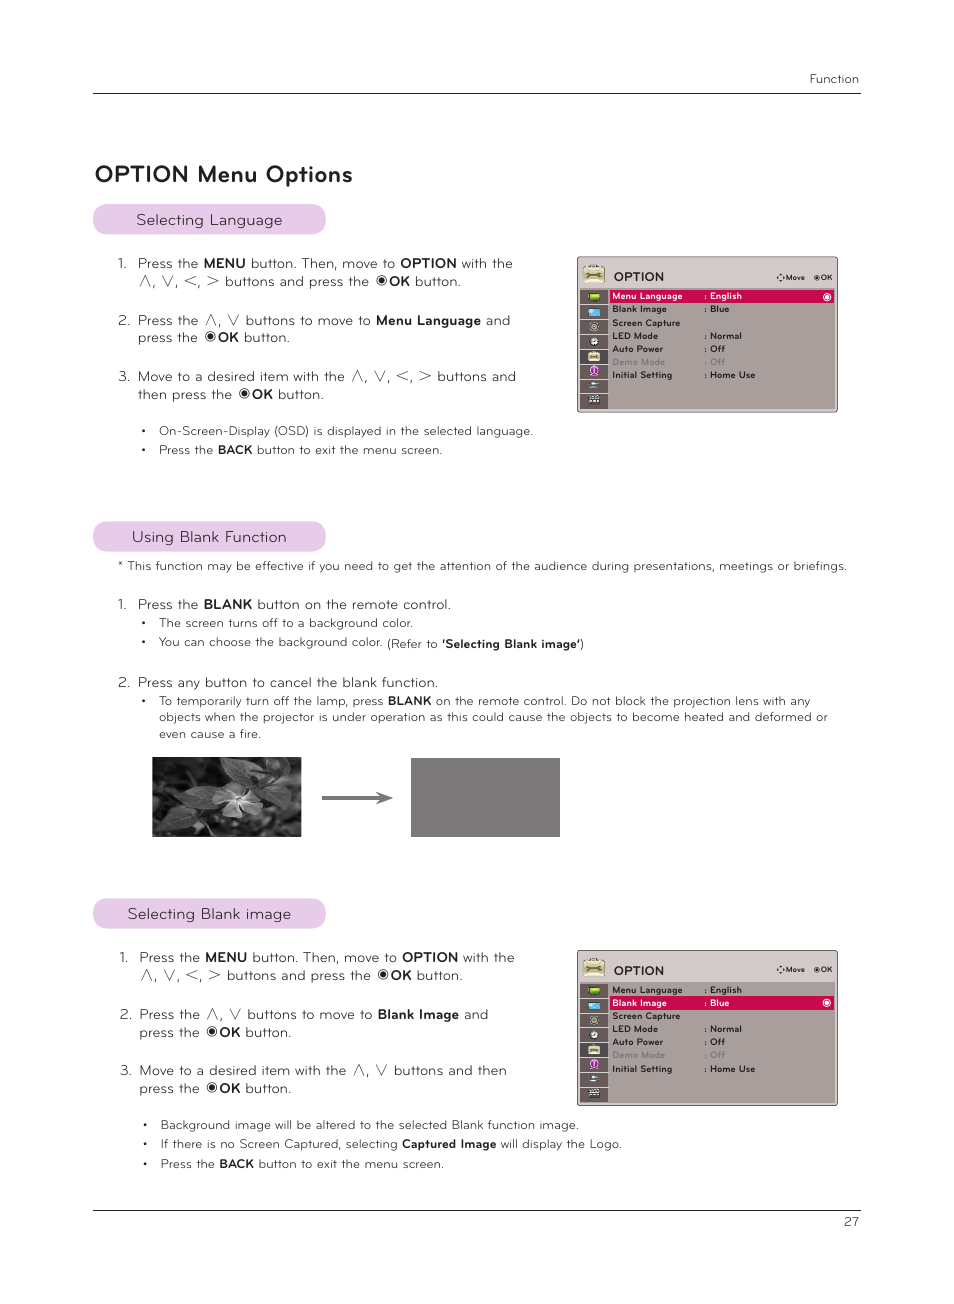 Option menu options, Selecting language, Using blank function | Selecting blank image | LG HX301G User Manual | Page 27 / 44